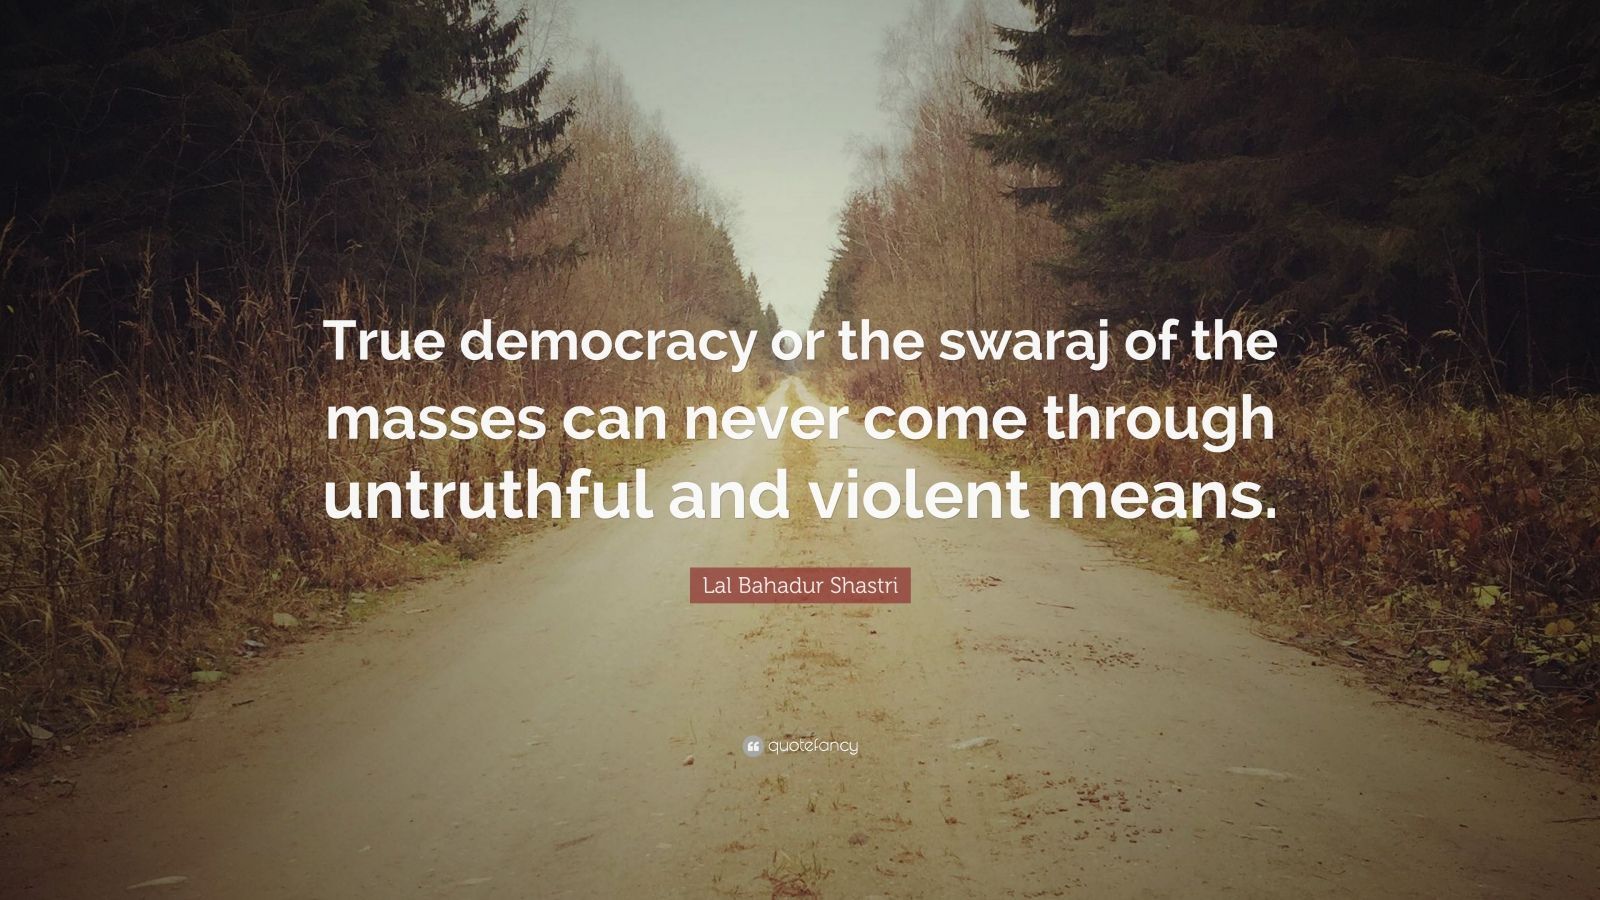 Lal Bahadur Shastri Quote: “True democracy or the swaraj